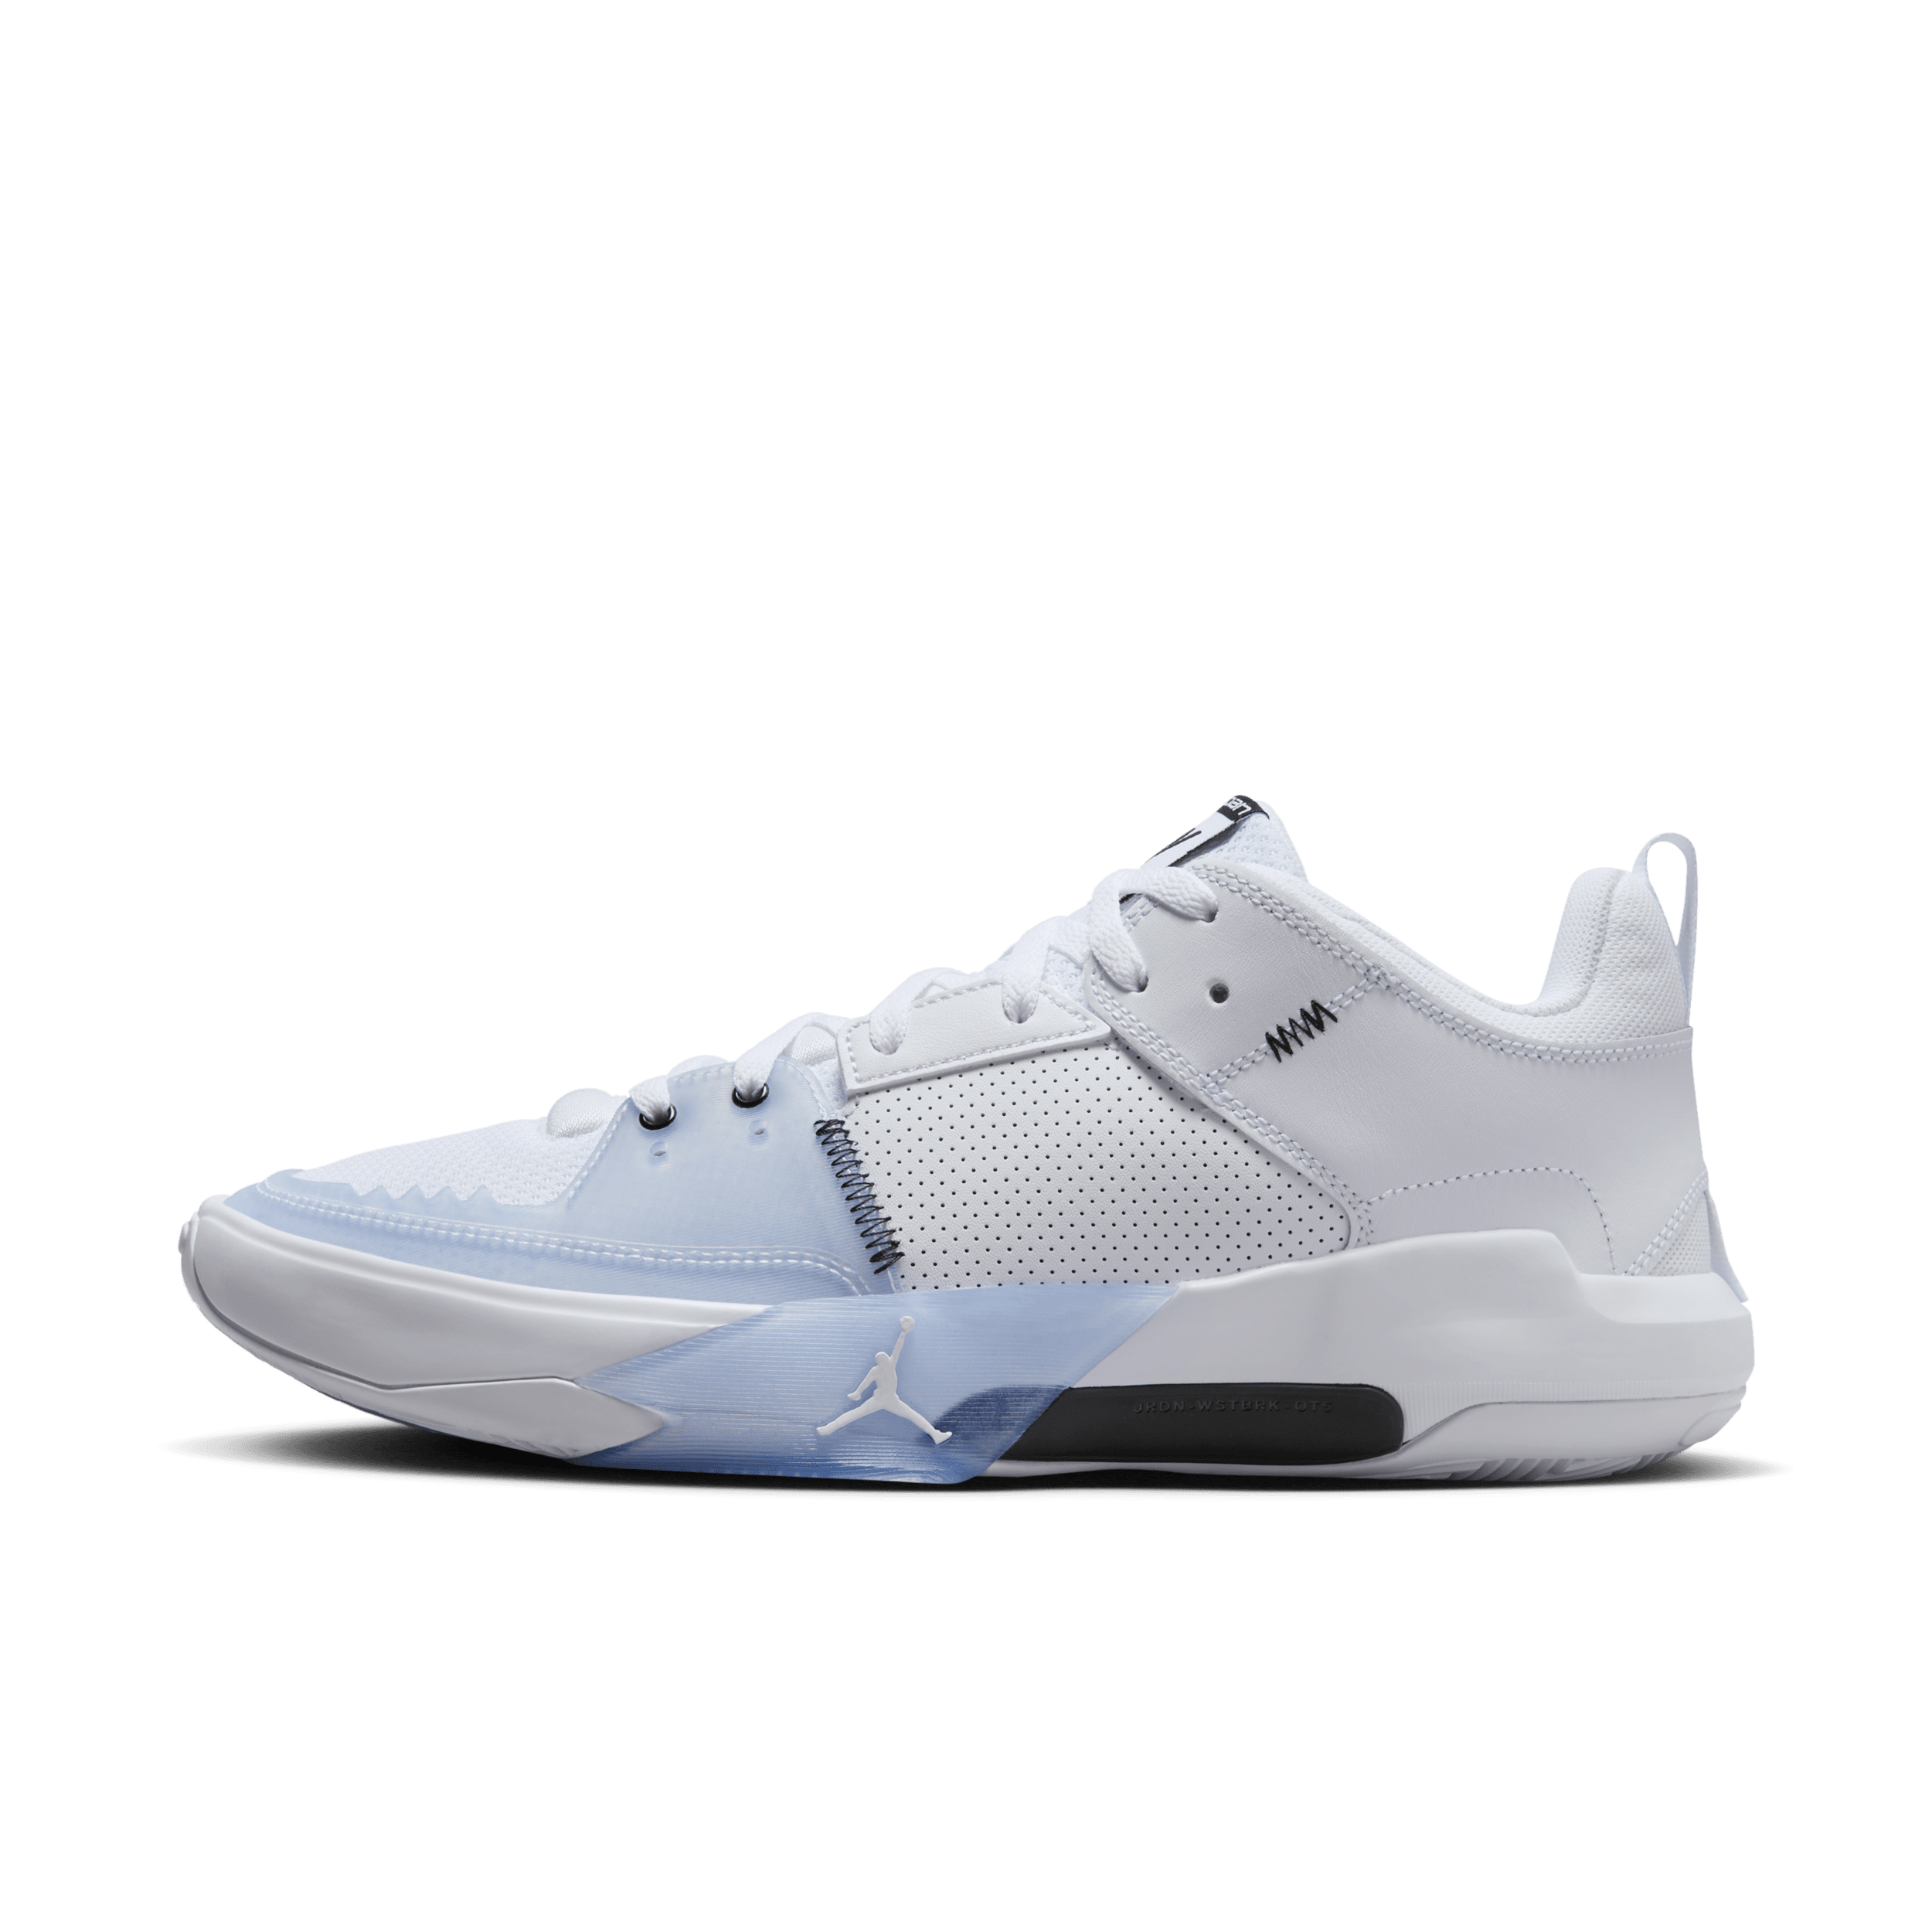 Jordan One Take 5 Zapatillas de baloncesto - Blanco